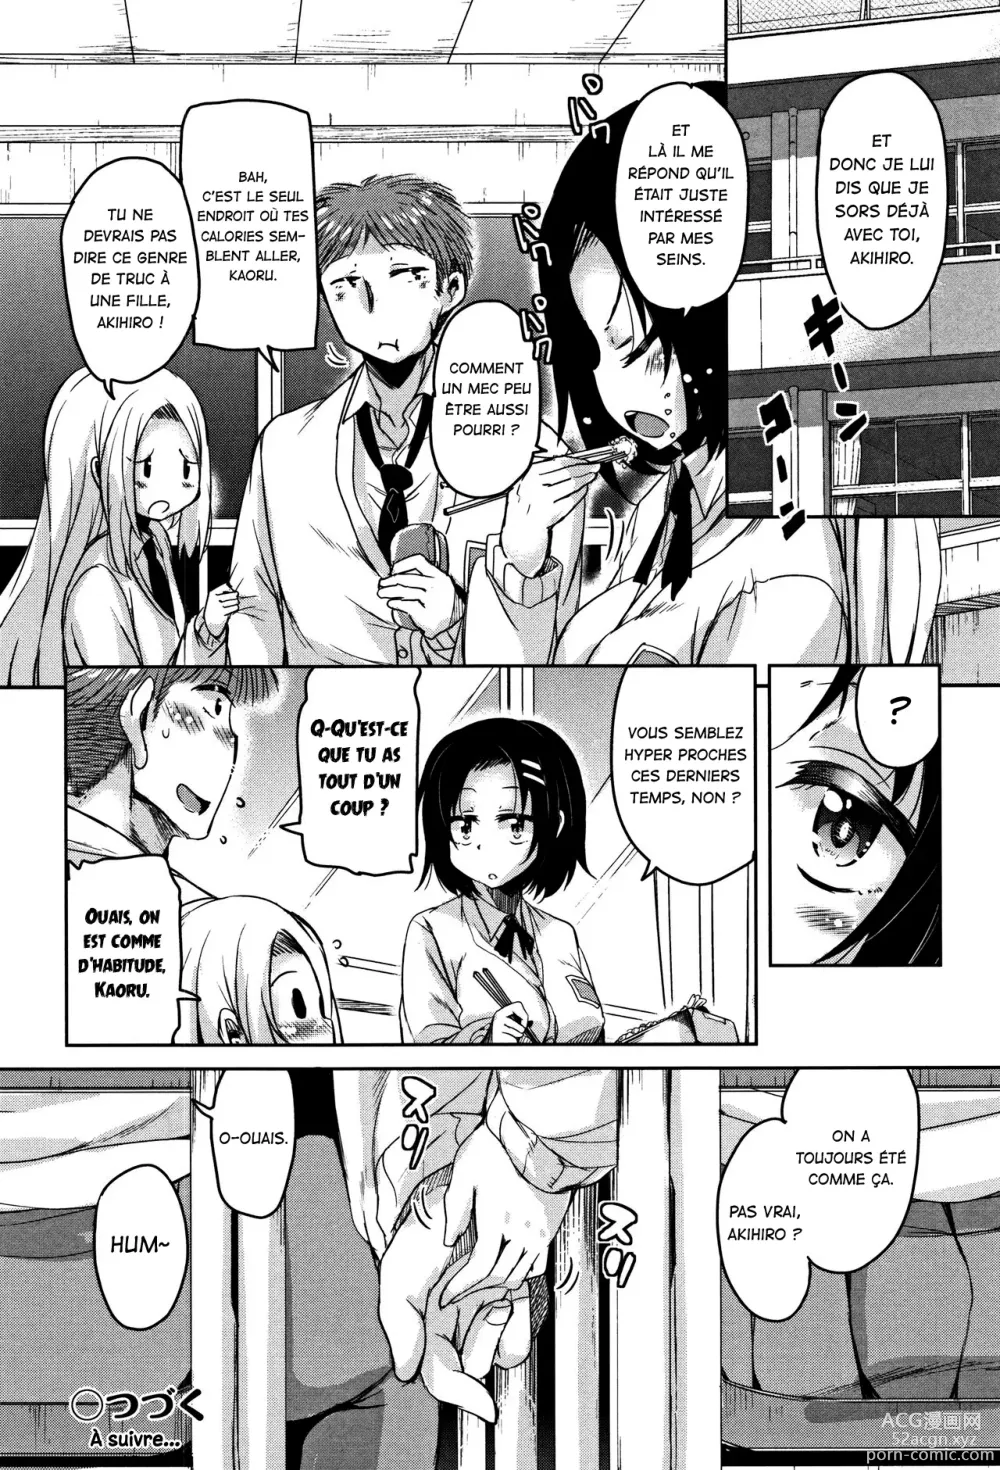 Page 24 of manga La dette TS de Narumi Chapitre d'Akihiro + Chapitre de Narumi + Chapitre de Kaoru